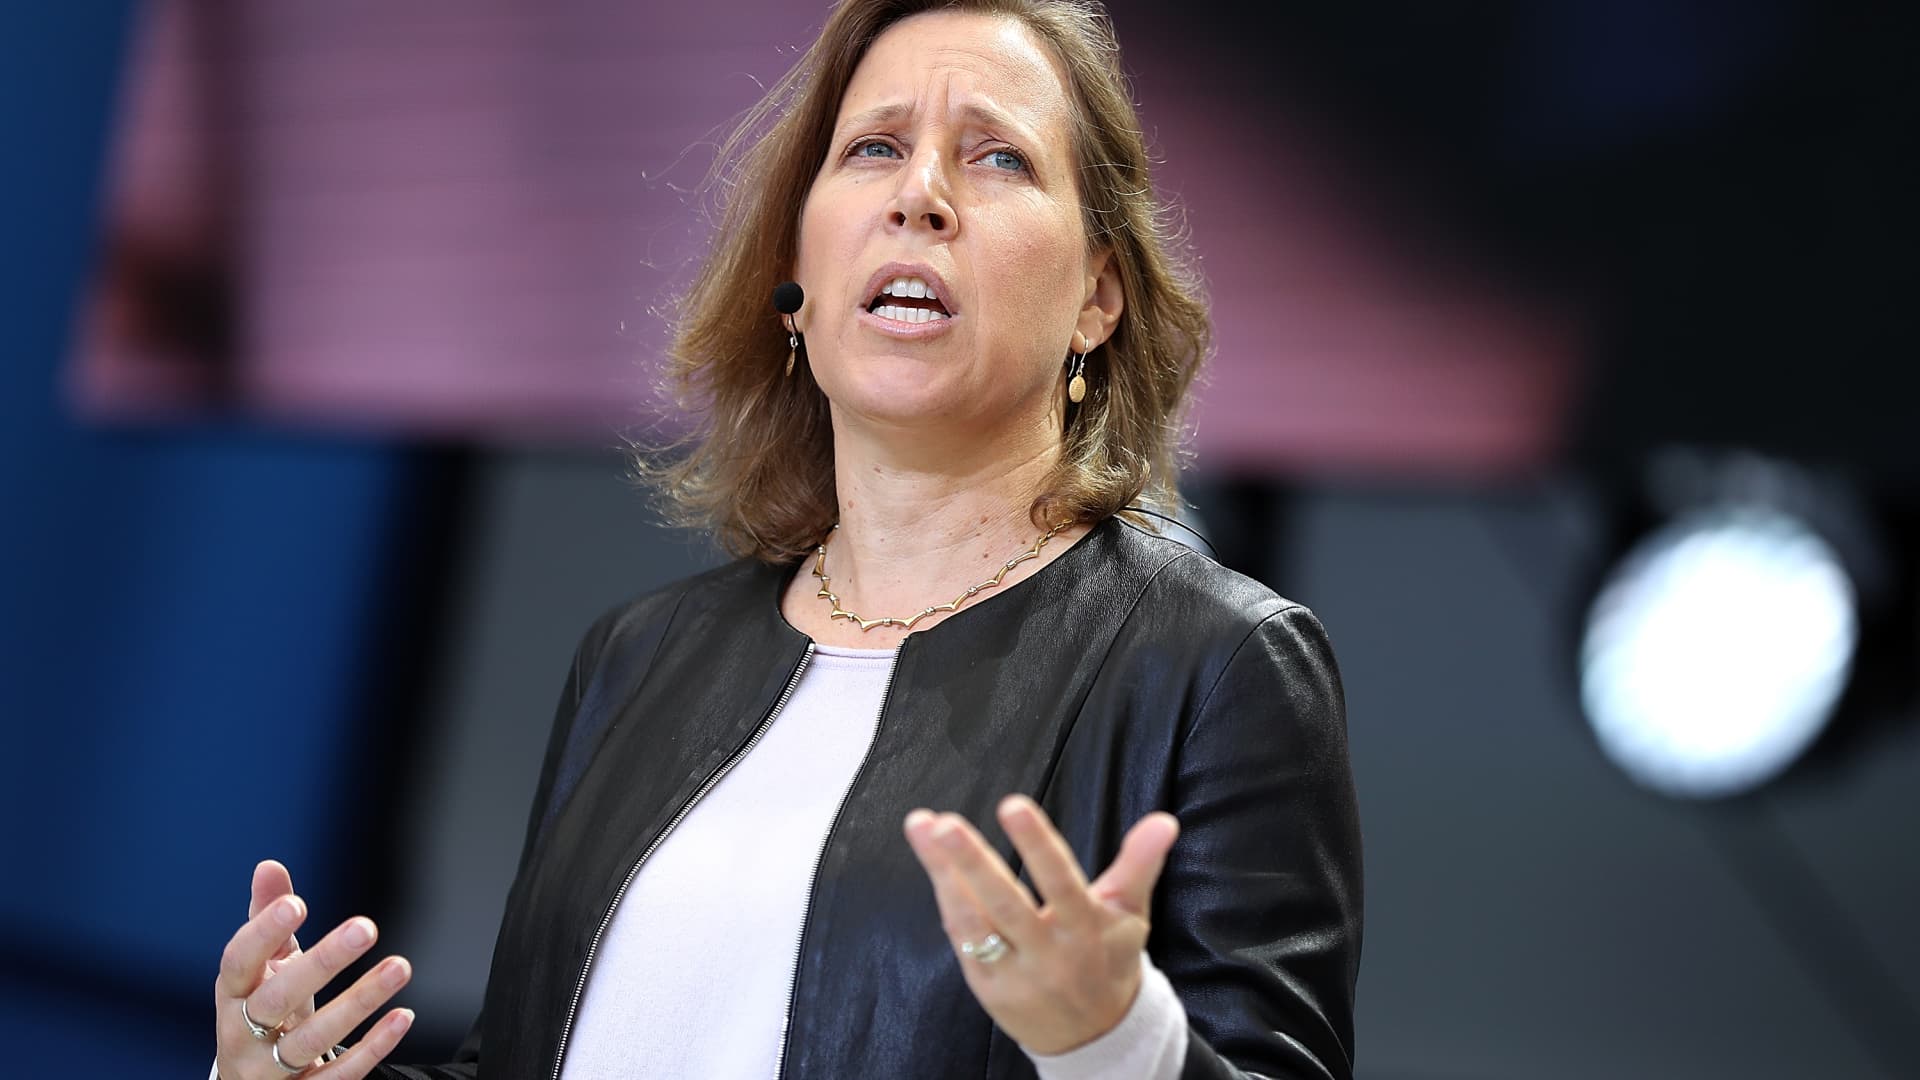 YouTube CEO Susan Wojcicki says she's stepping down